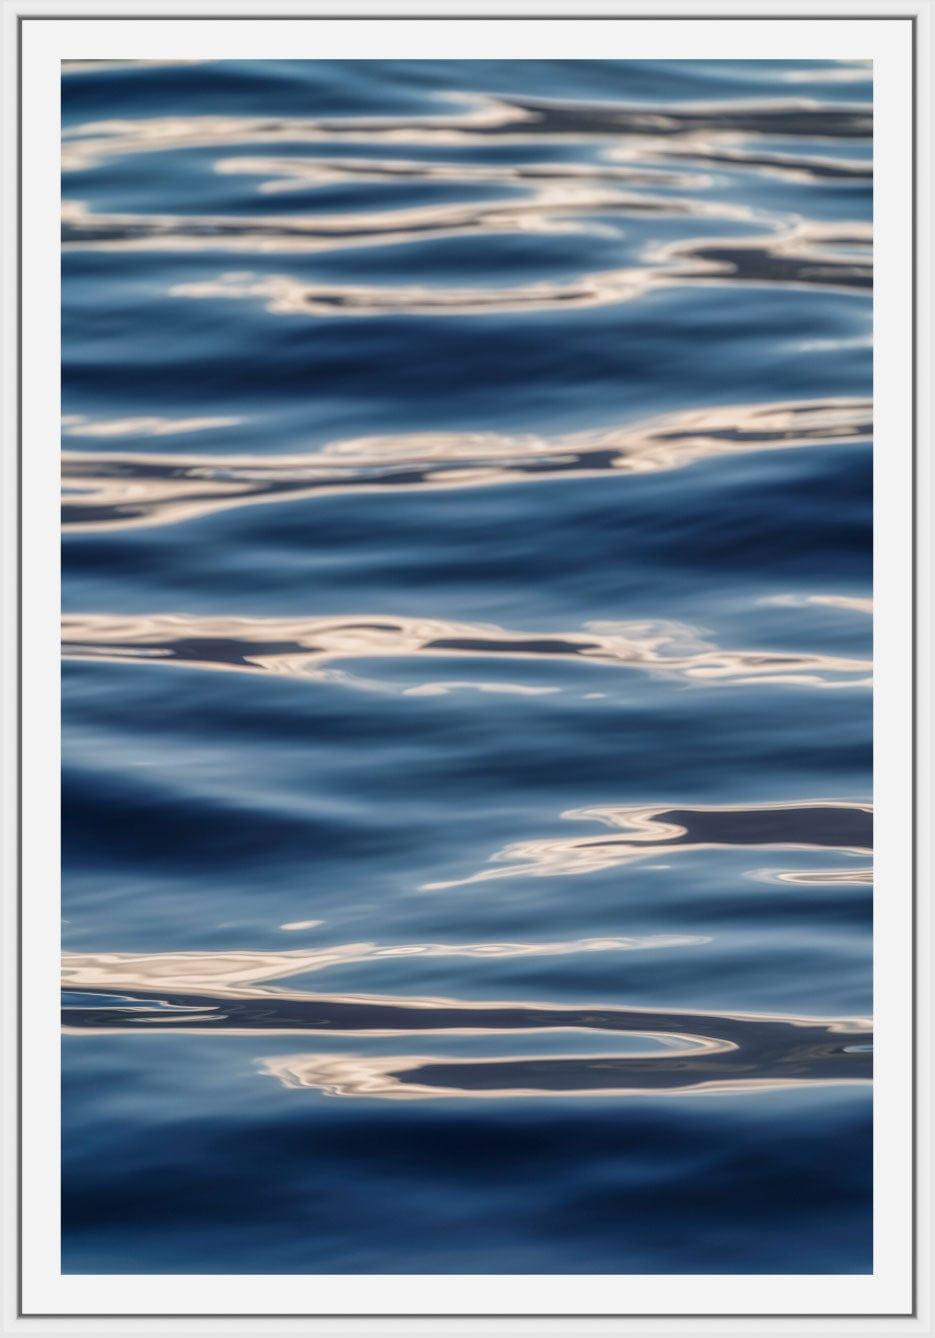 Liquid Harmony - Living Moments Media - 3500-5500, 800-3500, Abstract, Acrylic, Artwork, Best Wall Artwork, blue, Boat, Canvas, Hawaii, Island, lahaina, maui, Maui Hawaii Fine Art Photography, Maui Hawaii Wall Art, Metal, New Moments, ocean, open-edition, over-5500, Prints, size-16-x-24, size-24-x-36, size-40-x-60, Sunrise, vertical, Visual Artwork, Water, waves, White